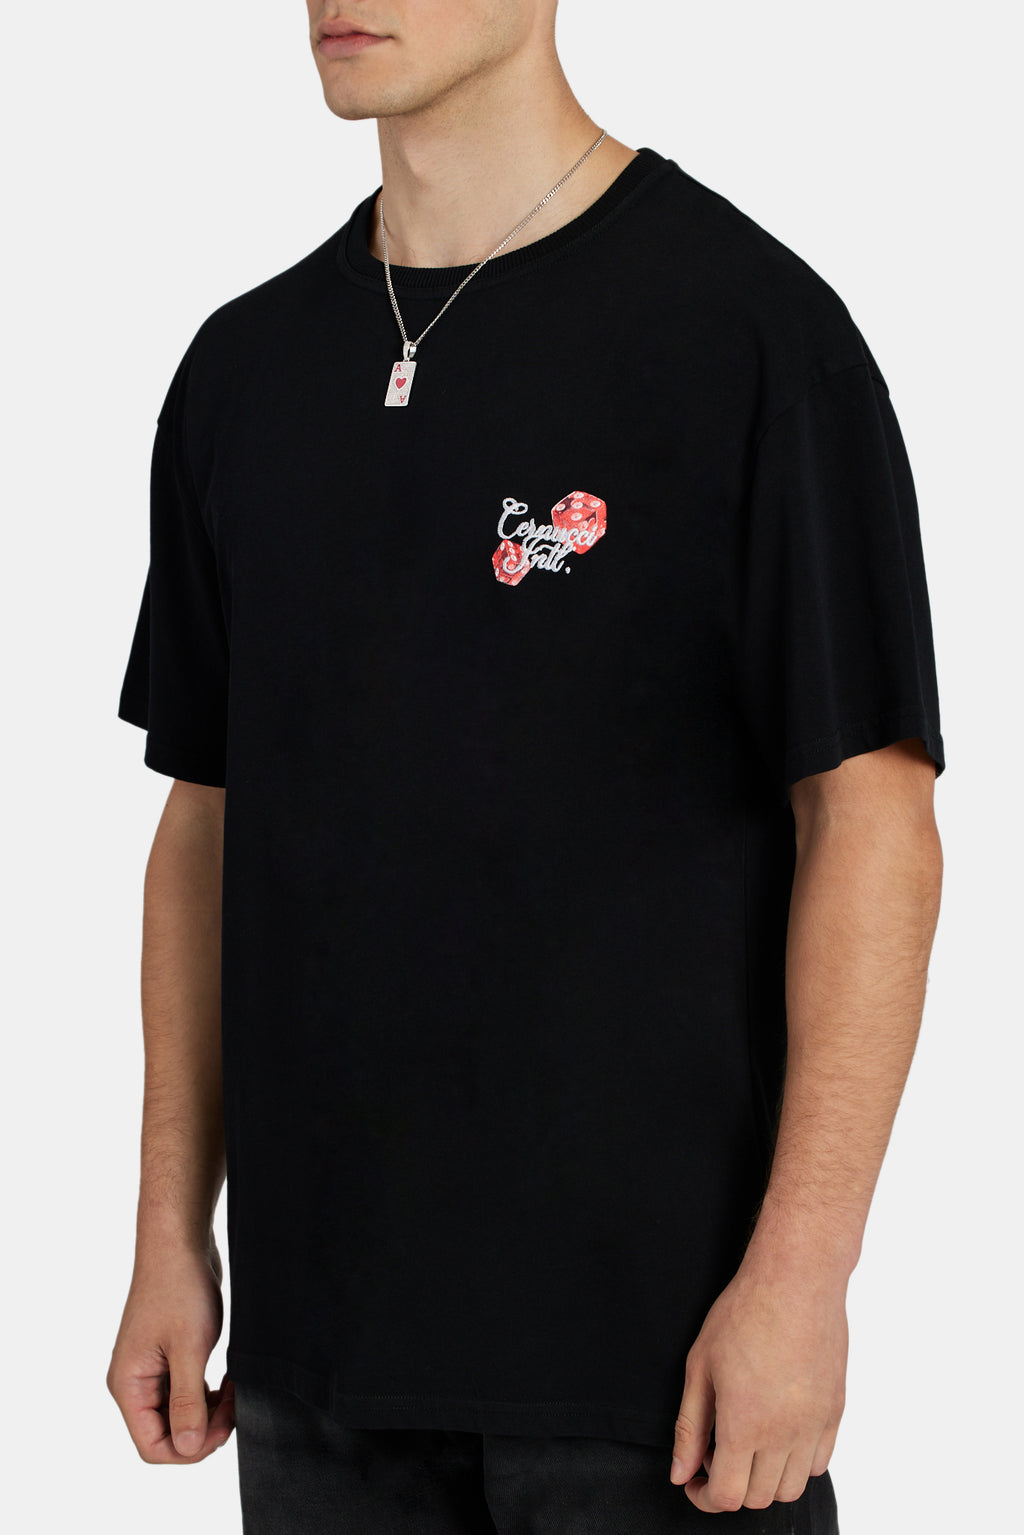 Red Dice Graphic T-Shirt - Black – Cernucci